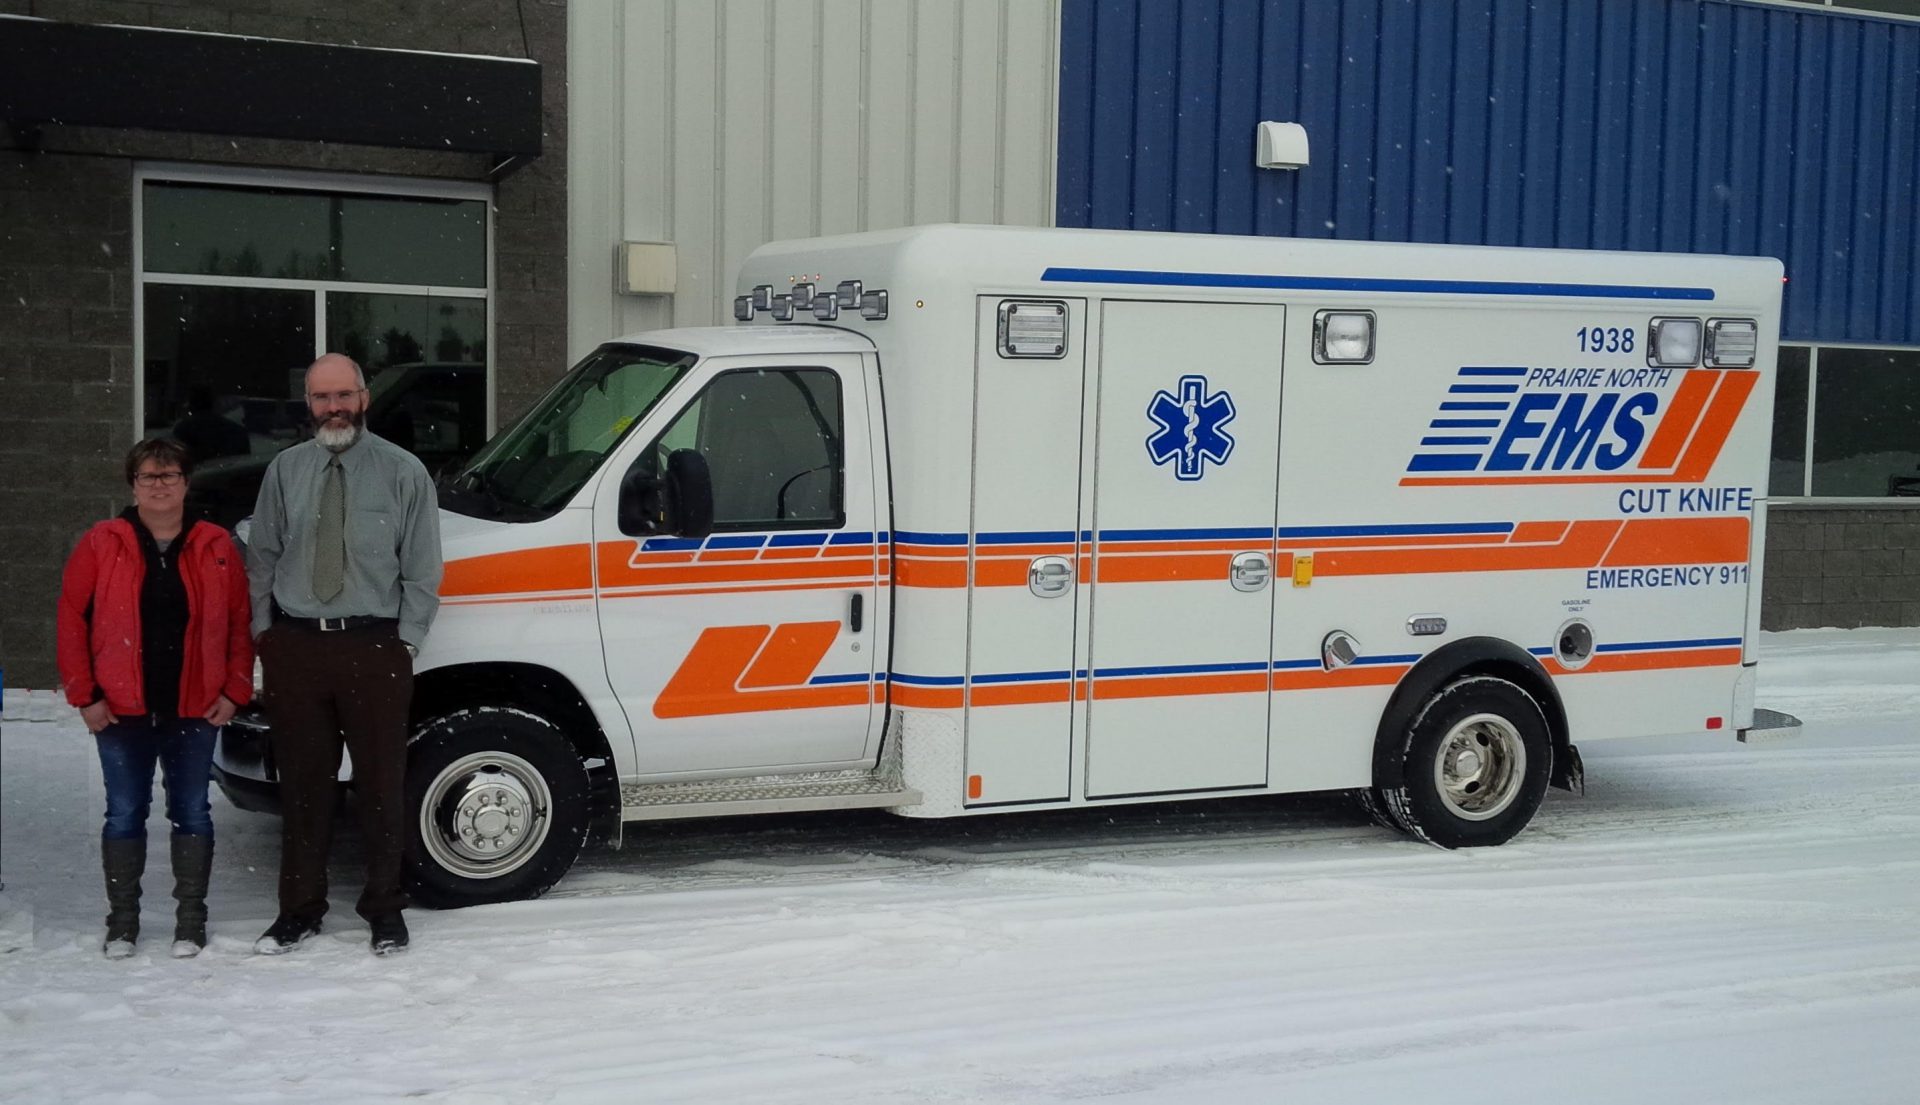 PNHR announces new ambulance for Cut Knife